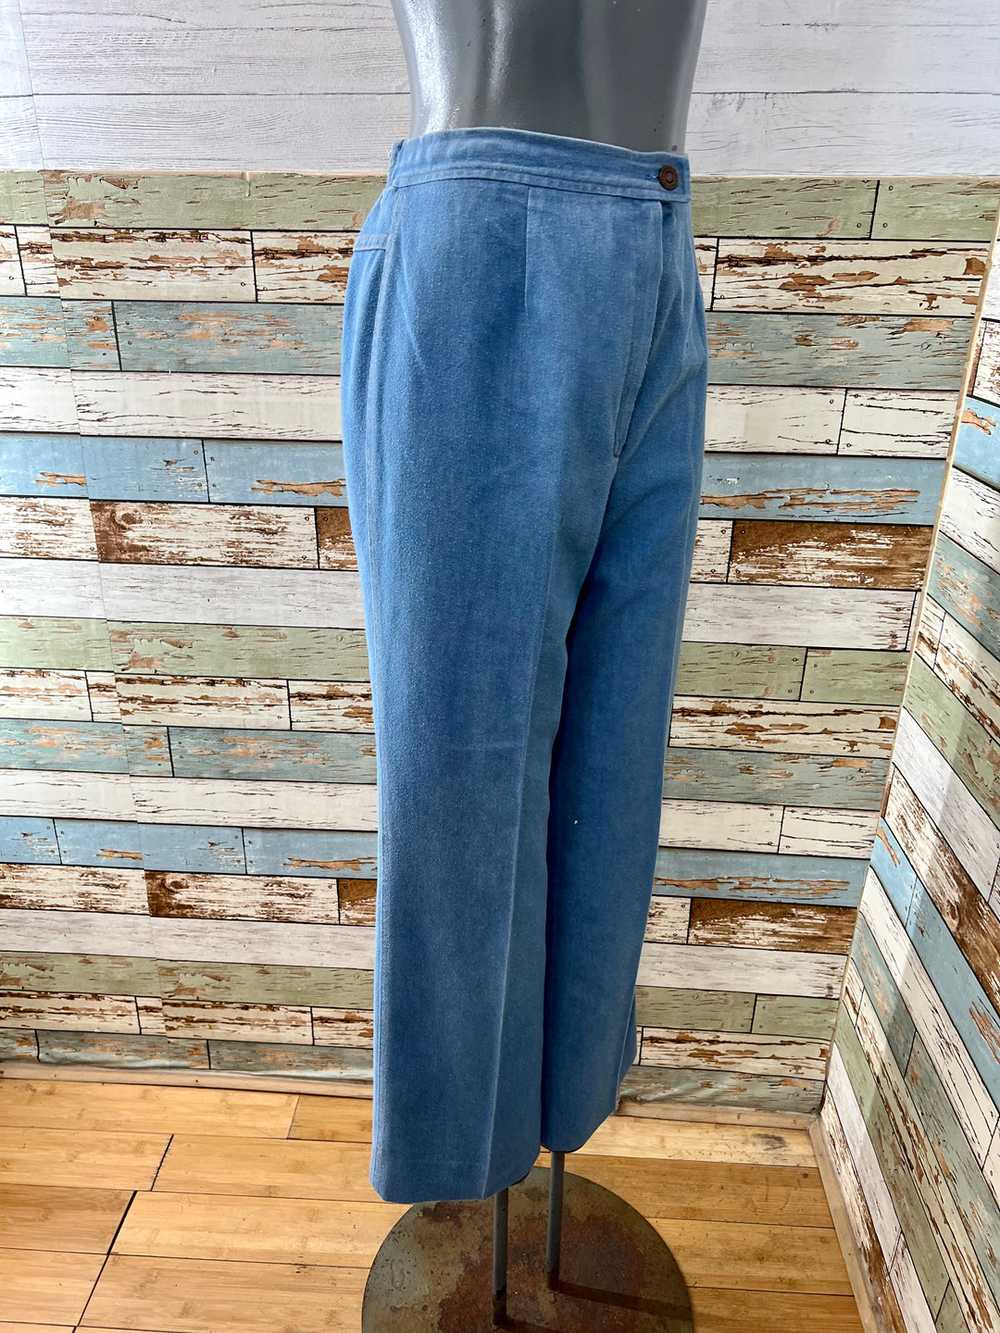 80’s Light Blue Denim Slacks Style Pants - image 6